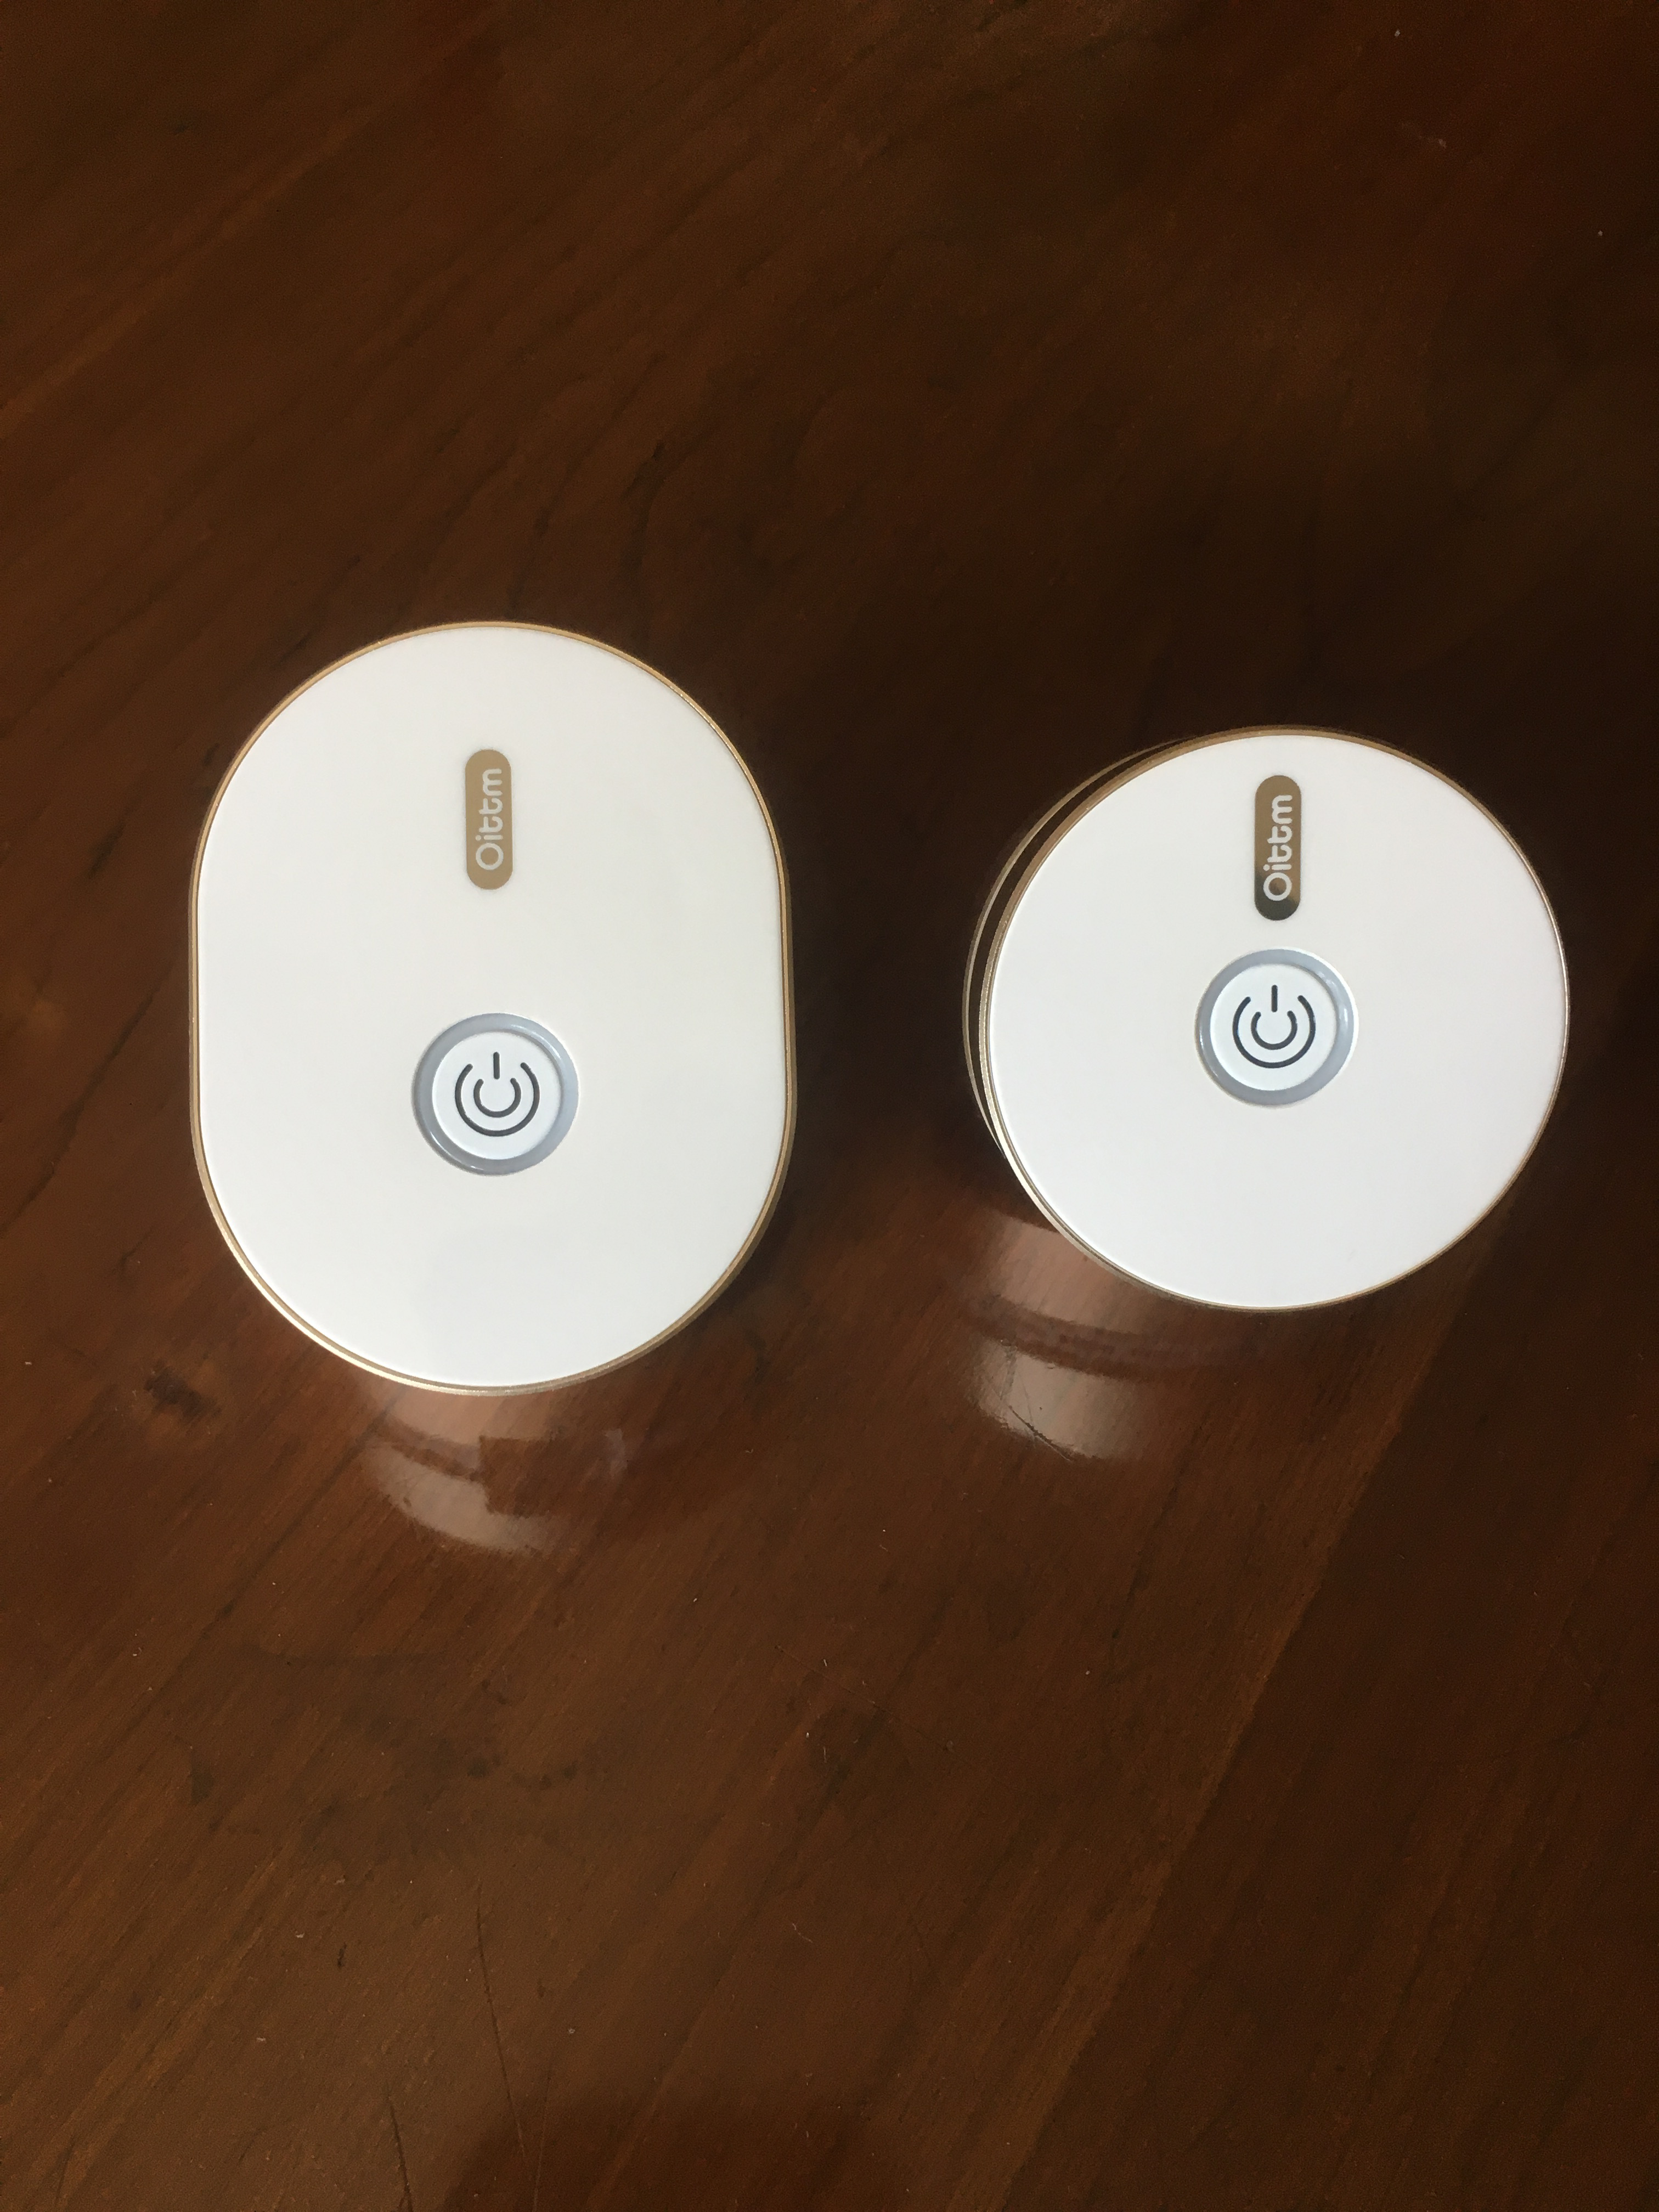 Oittm Wi-Fi Smart Plug Review. A good smart home timer too. - Gearbrain